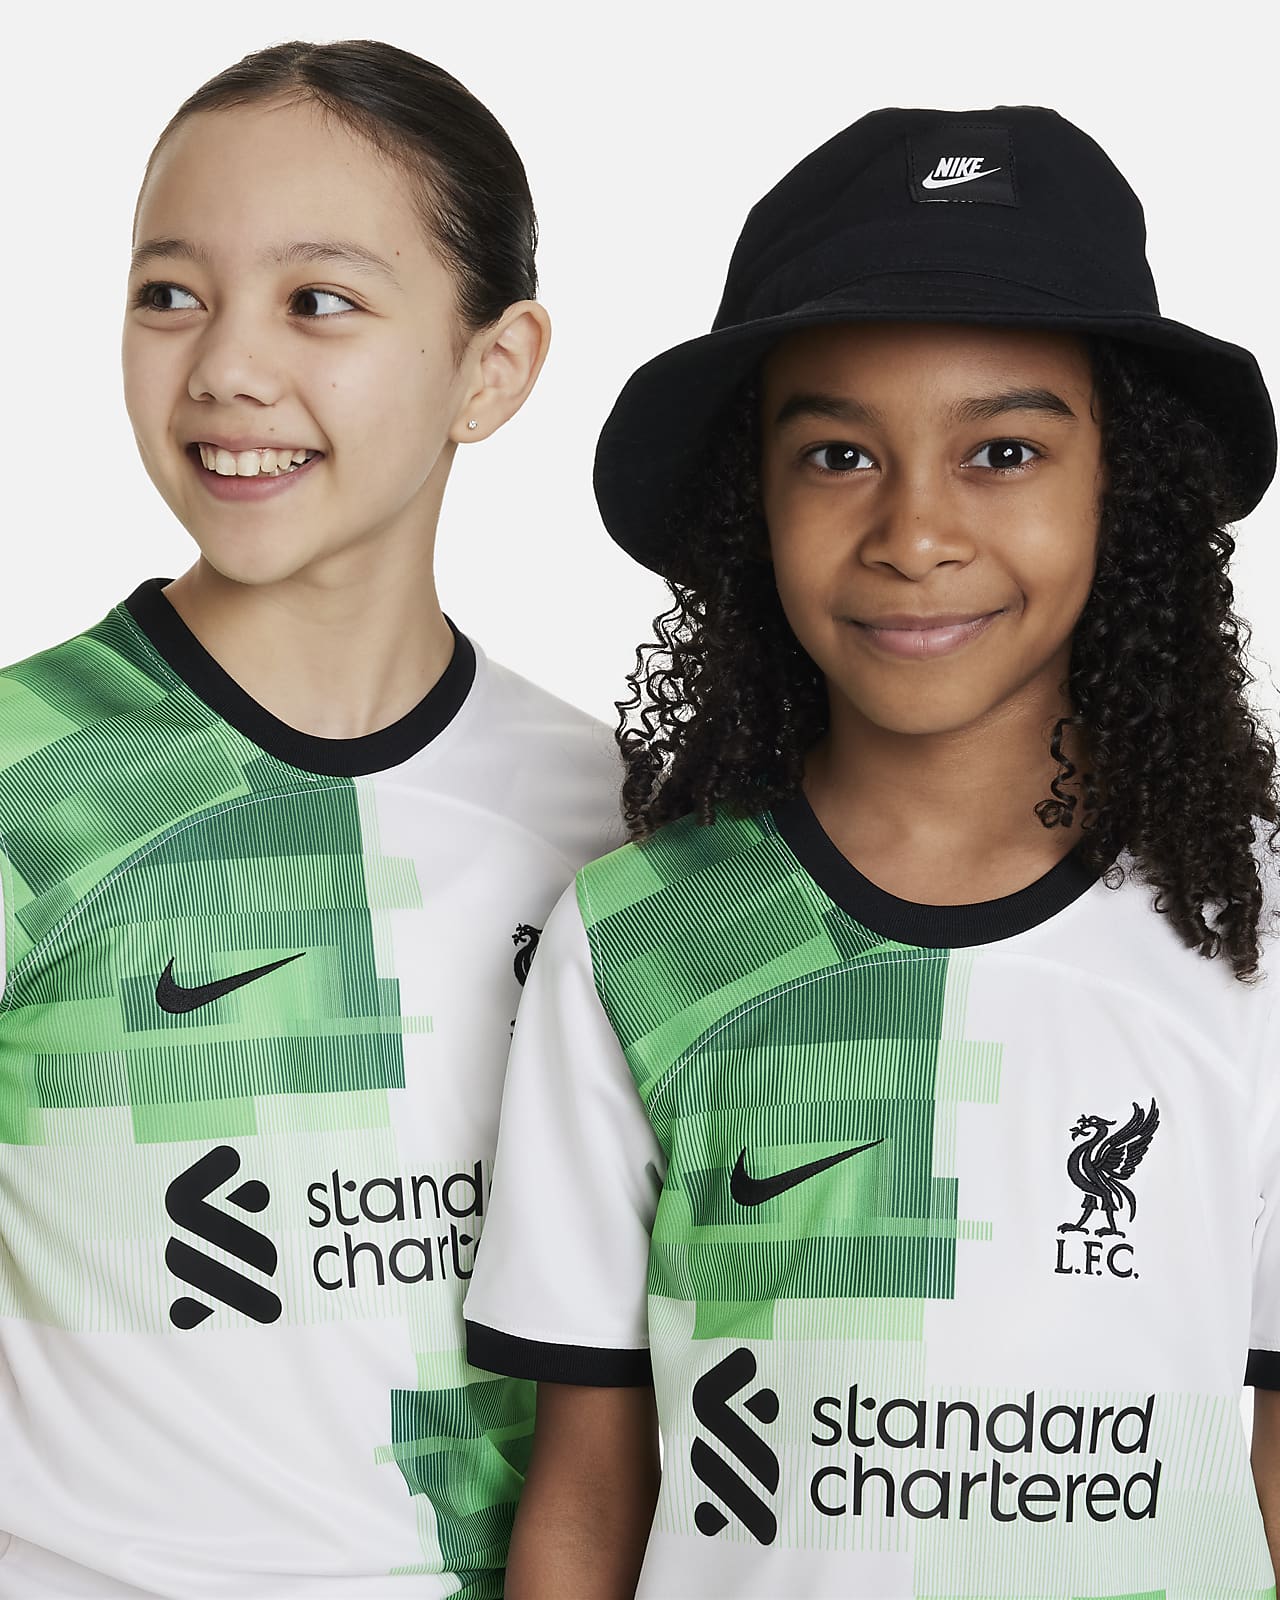 Camiseta Nike Liverpool niño 22 2023 Dri-Fit Stadium